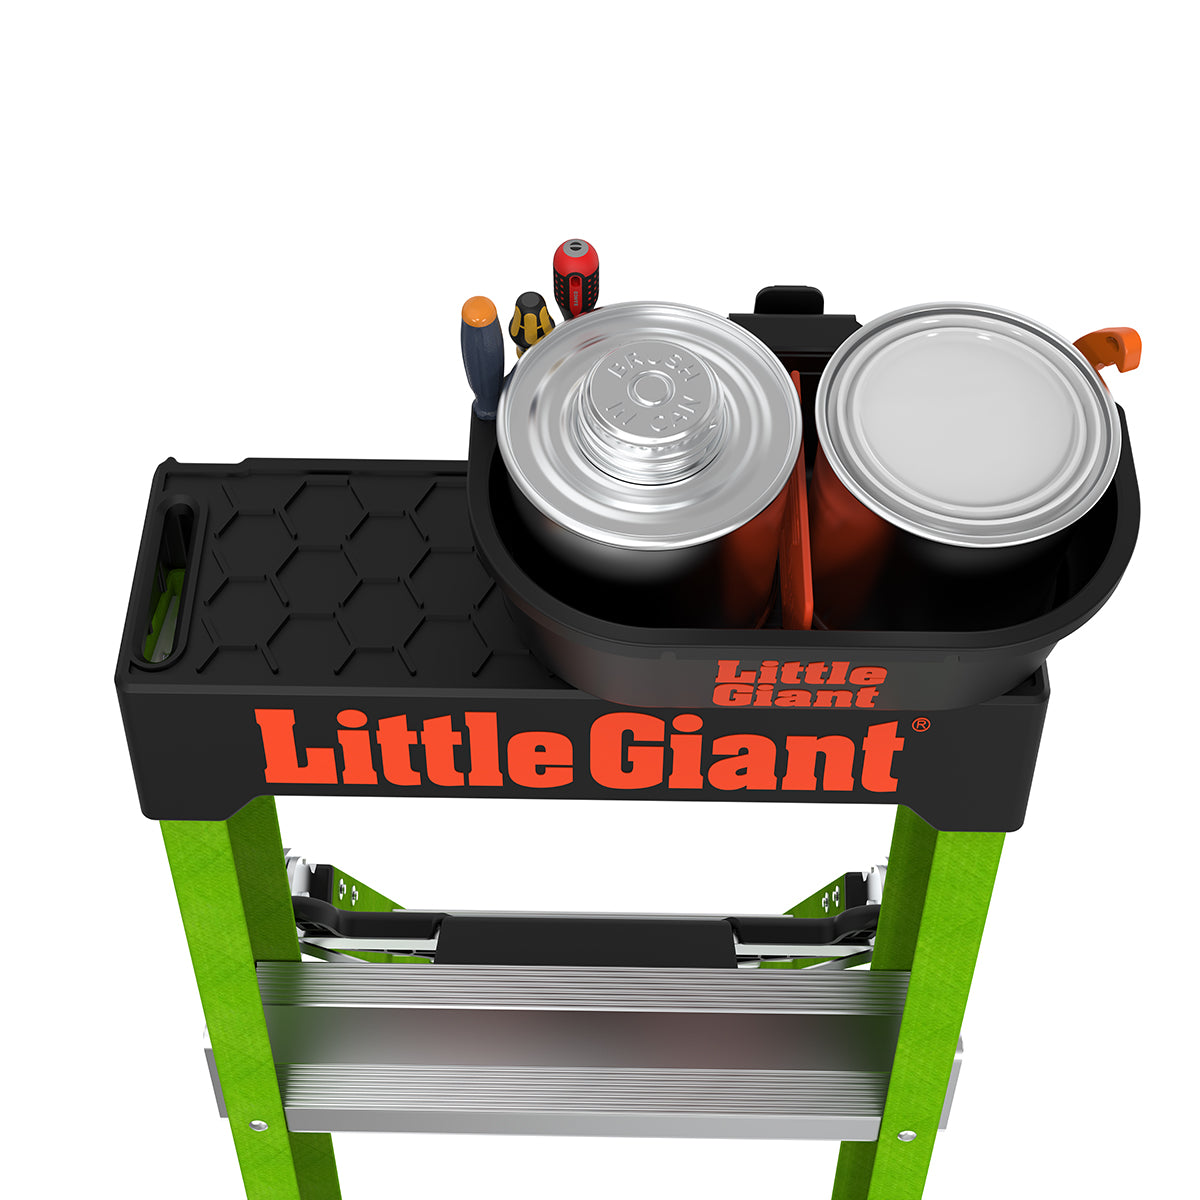 Little Giant Loot Box